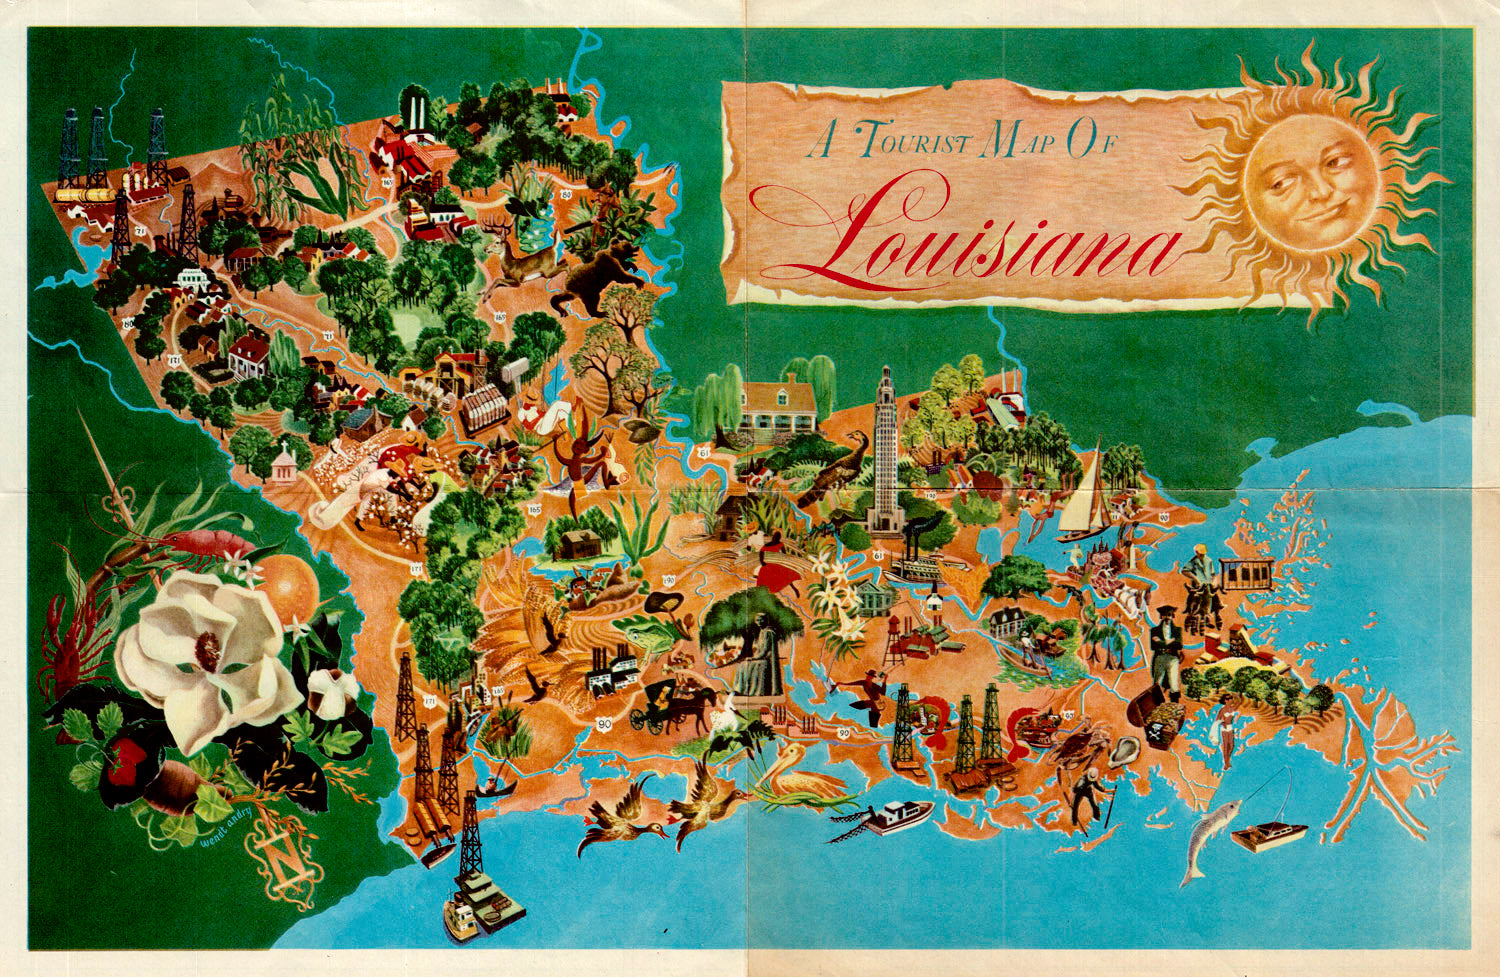 (LA.) A Tourist Map Of Louisiana